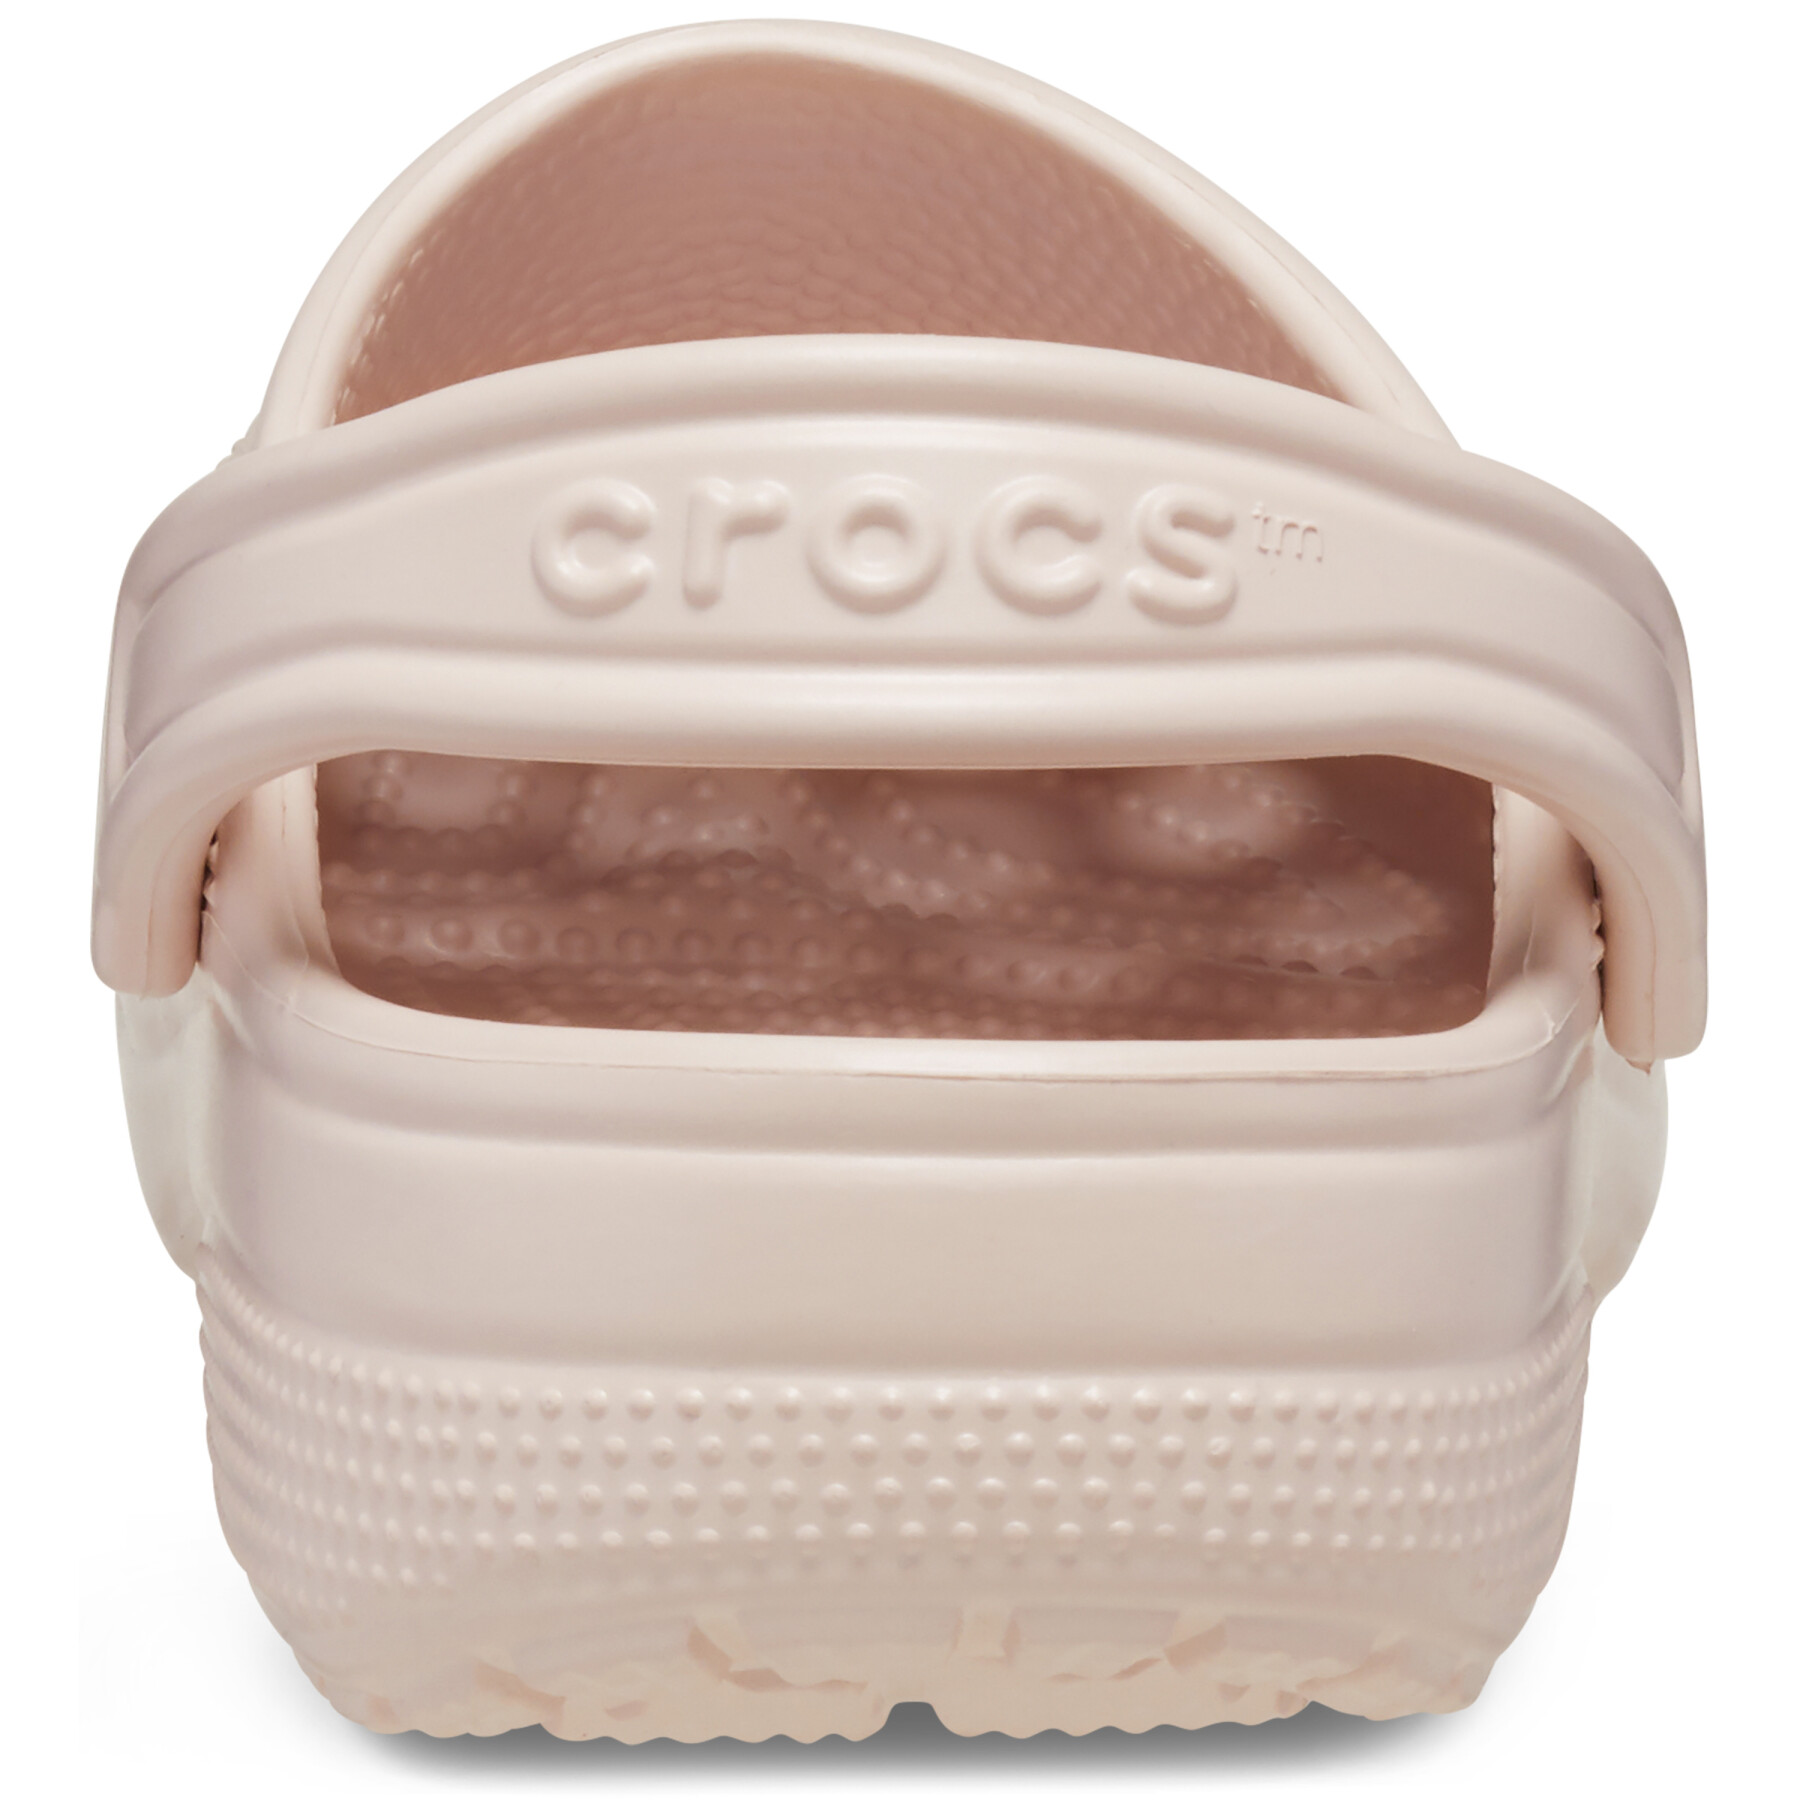 Tamancos Crocs Classic